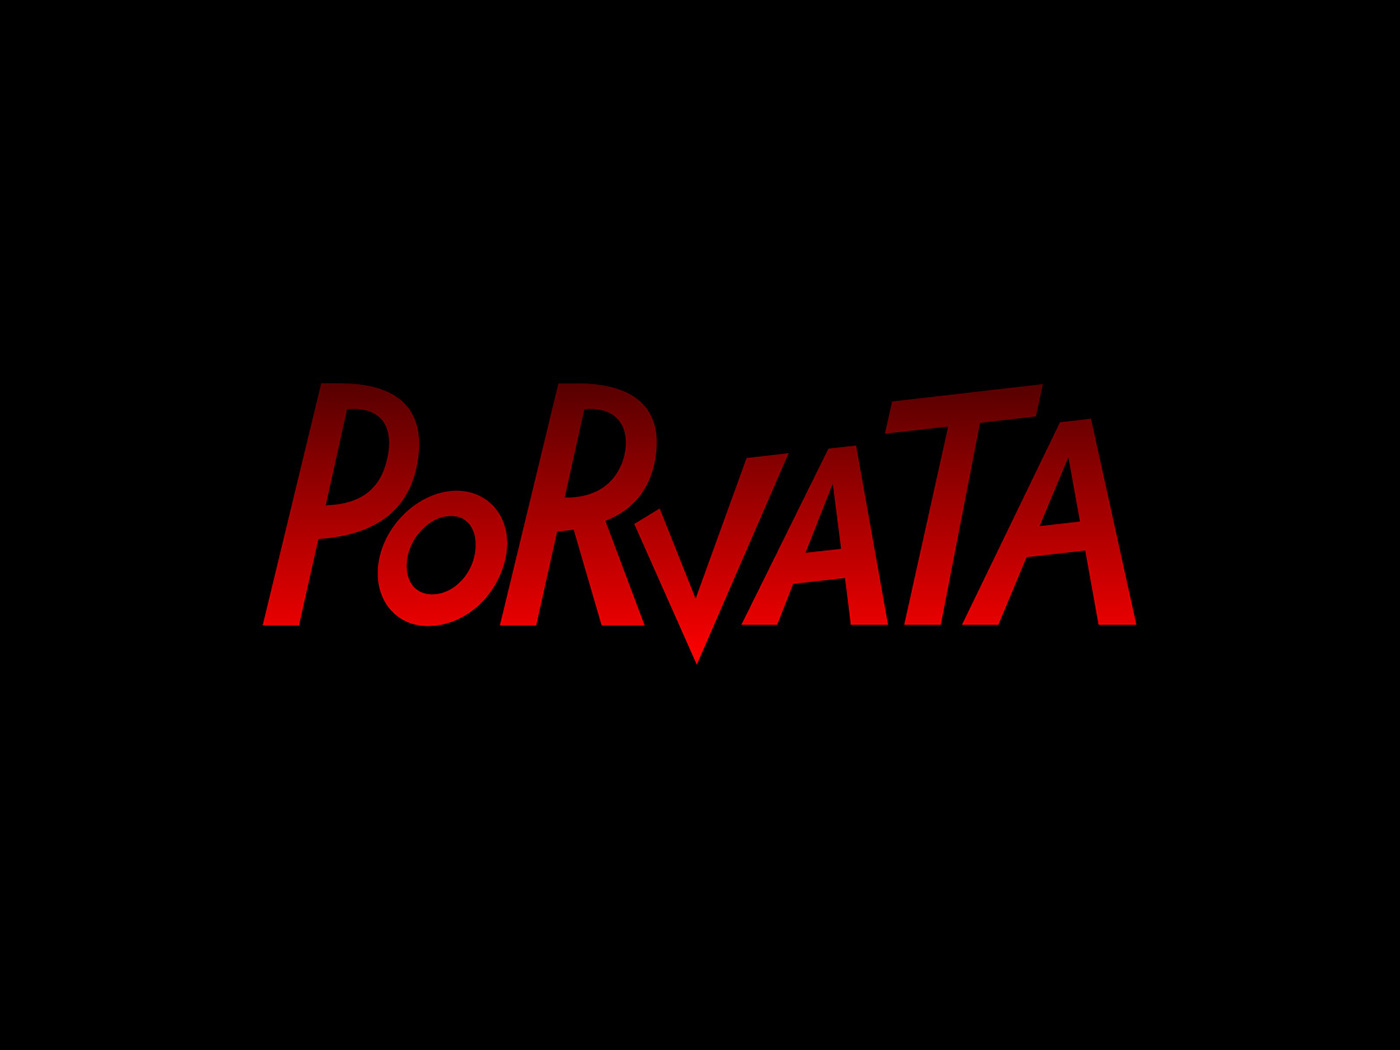 rock music logo sign porvata alternative brand identity Style